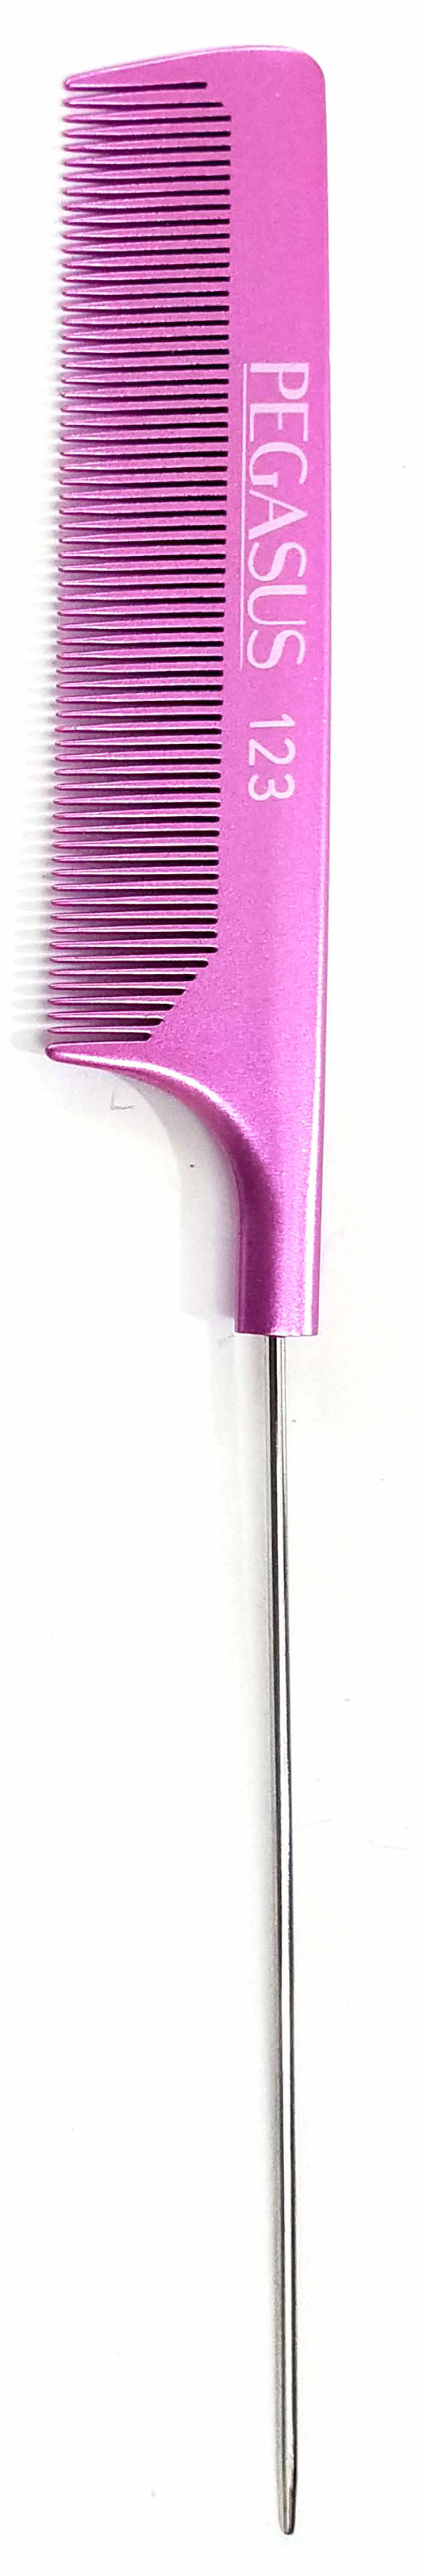 *Pegasus 123/7 Extra Long Metal Tail Comb - Metallic Pink